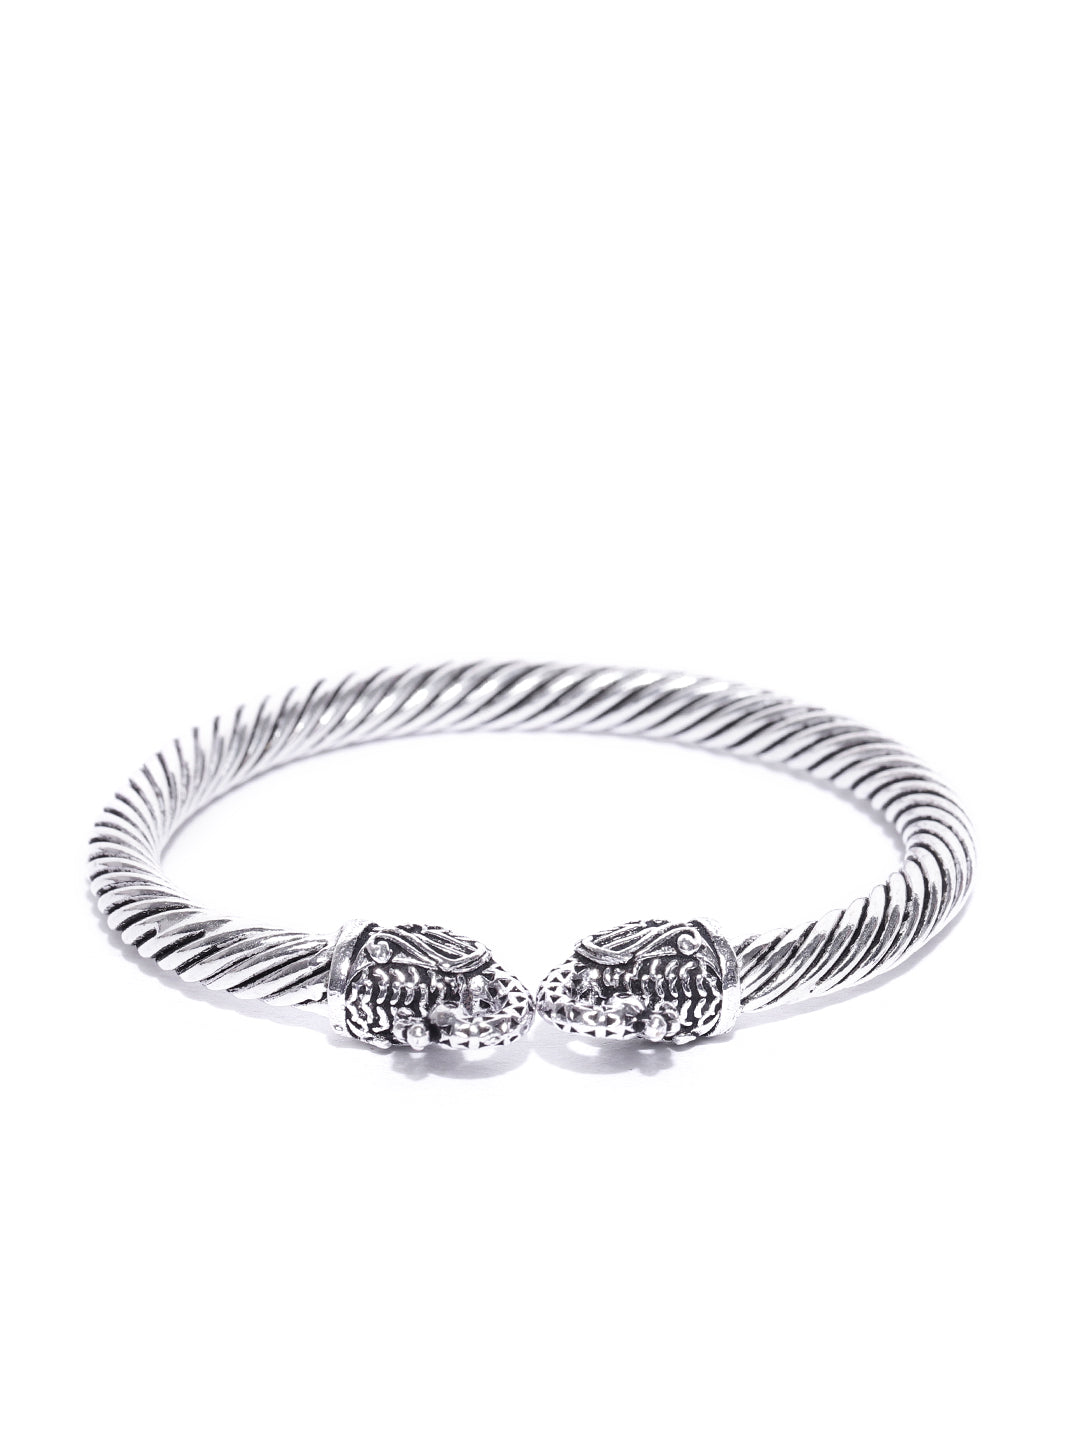 Oxidised Silver Peacock Inspired Twisted Rope Design Kada Bracelet